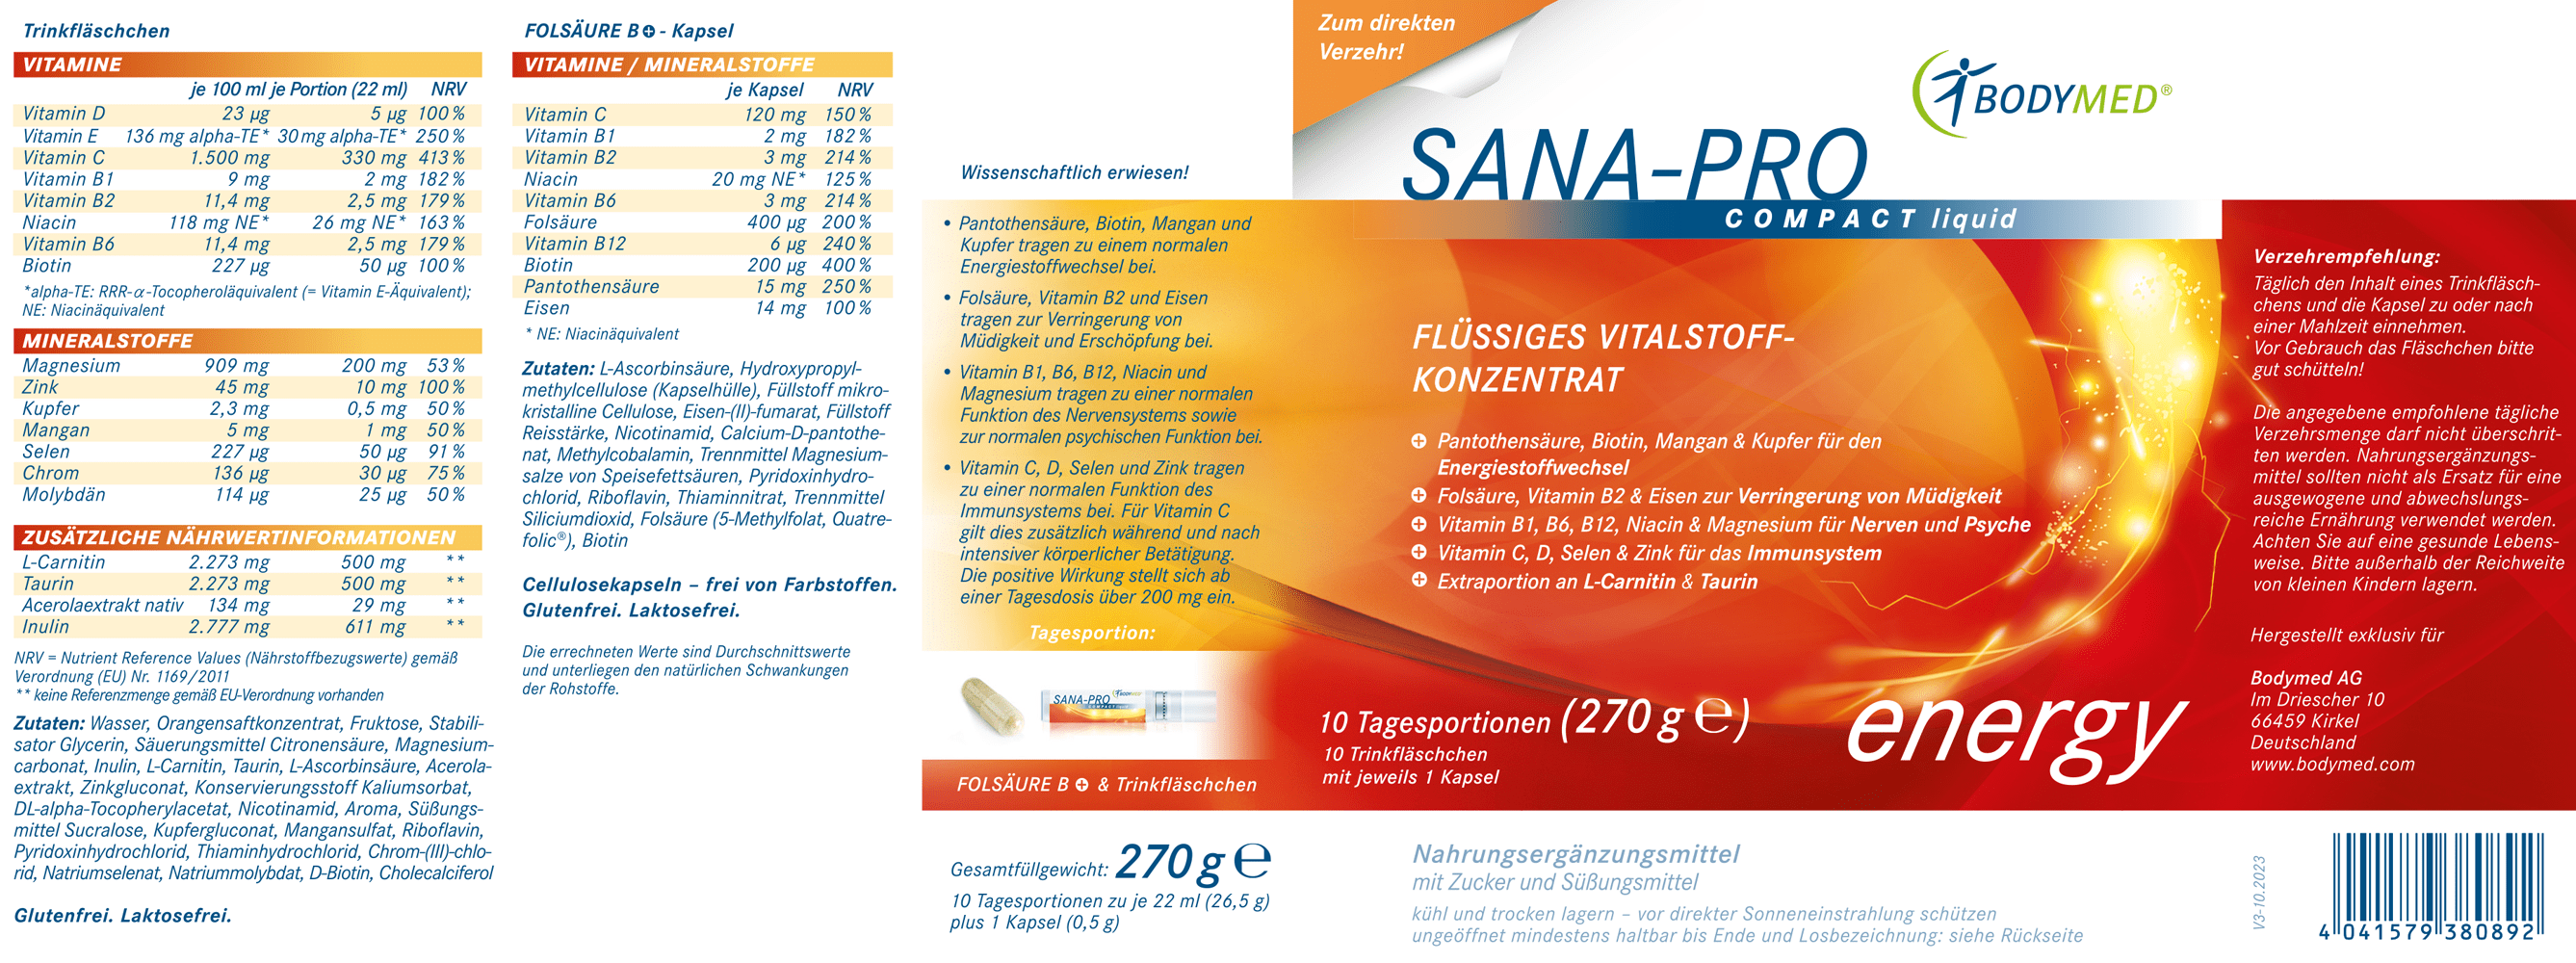 SANA-PRO COMPACT liquid energy